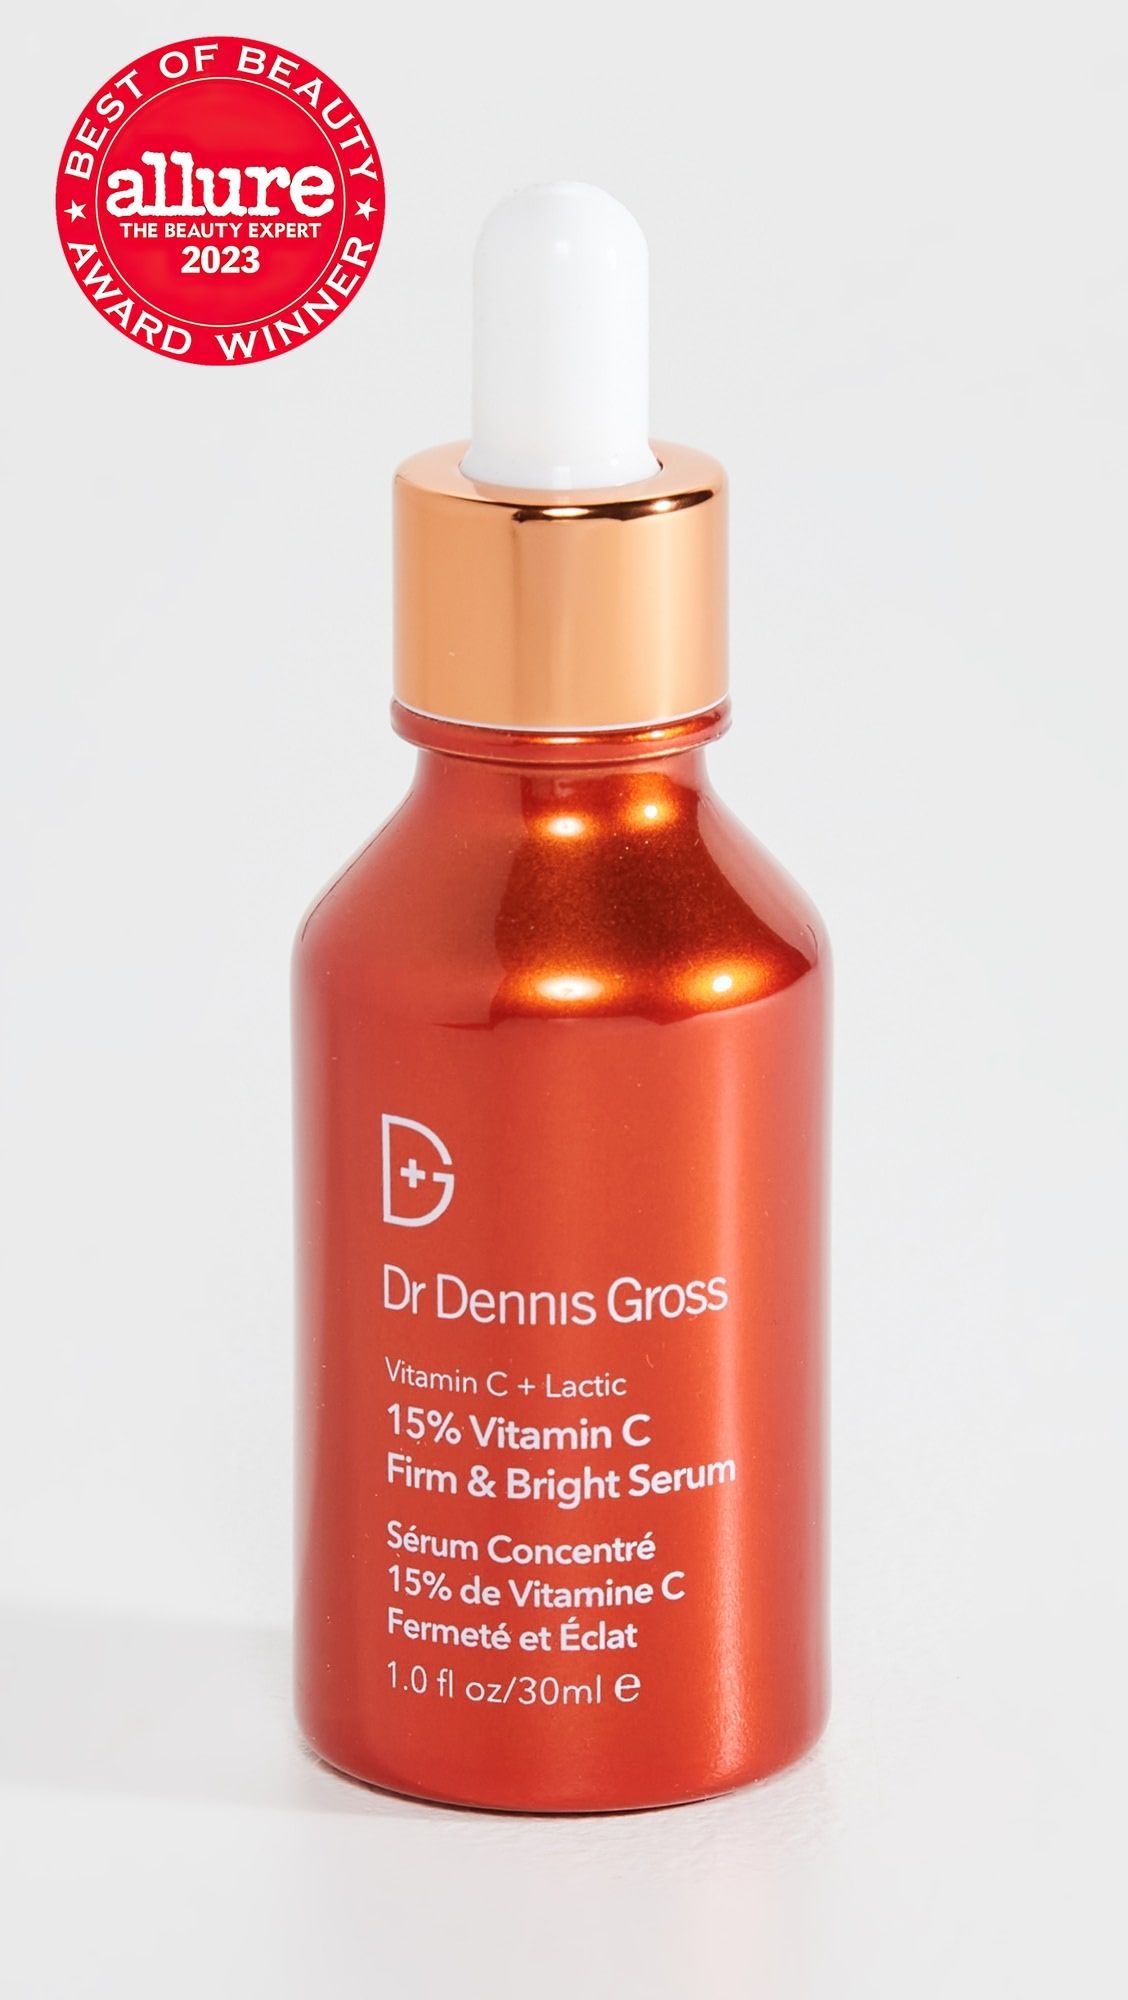 Dr. Dennis Gross | Shopbop